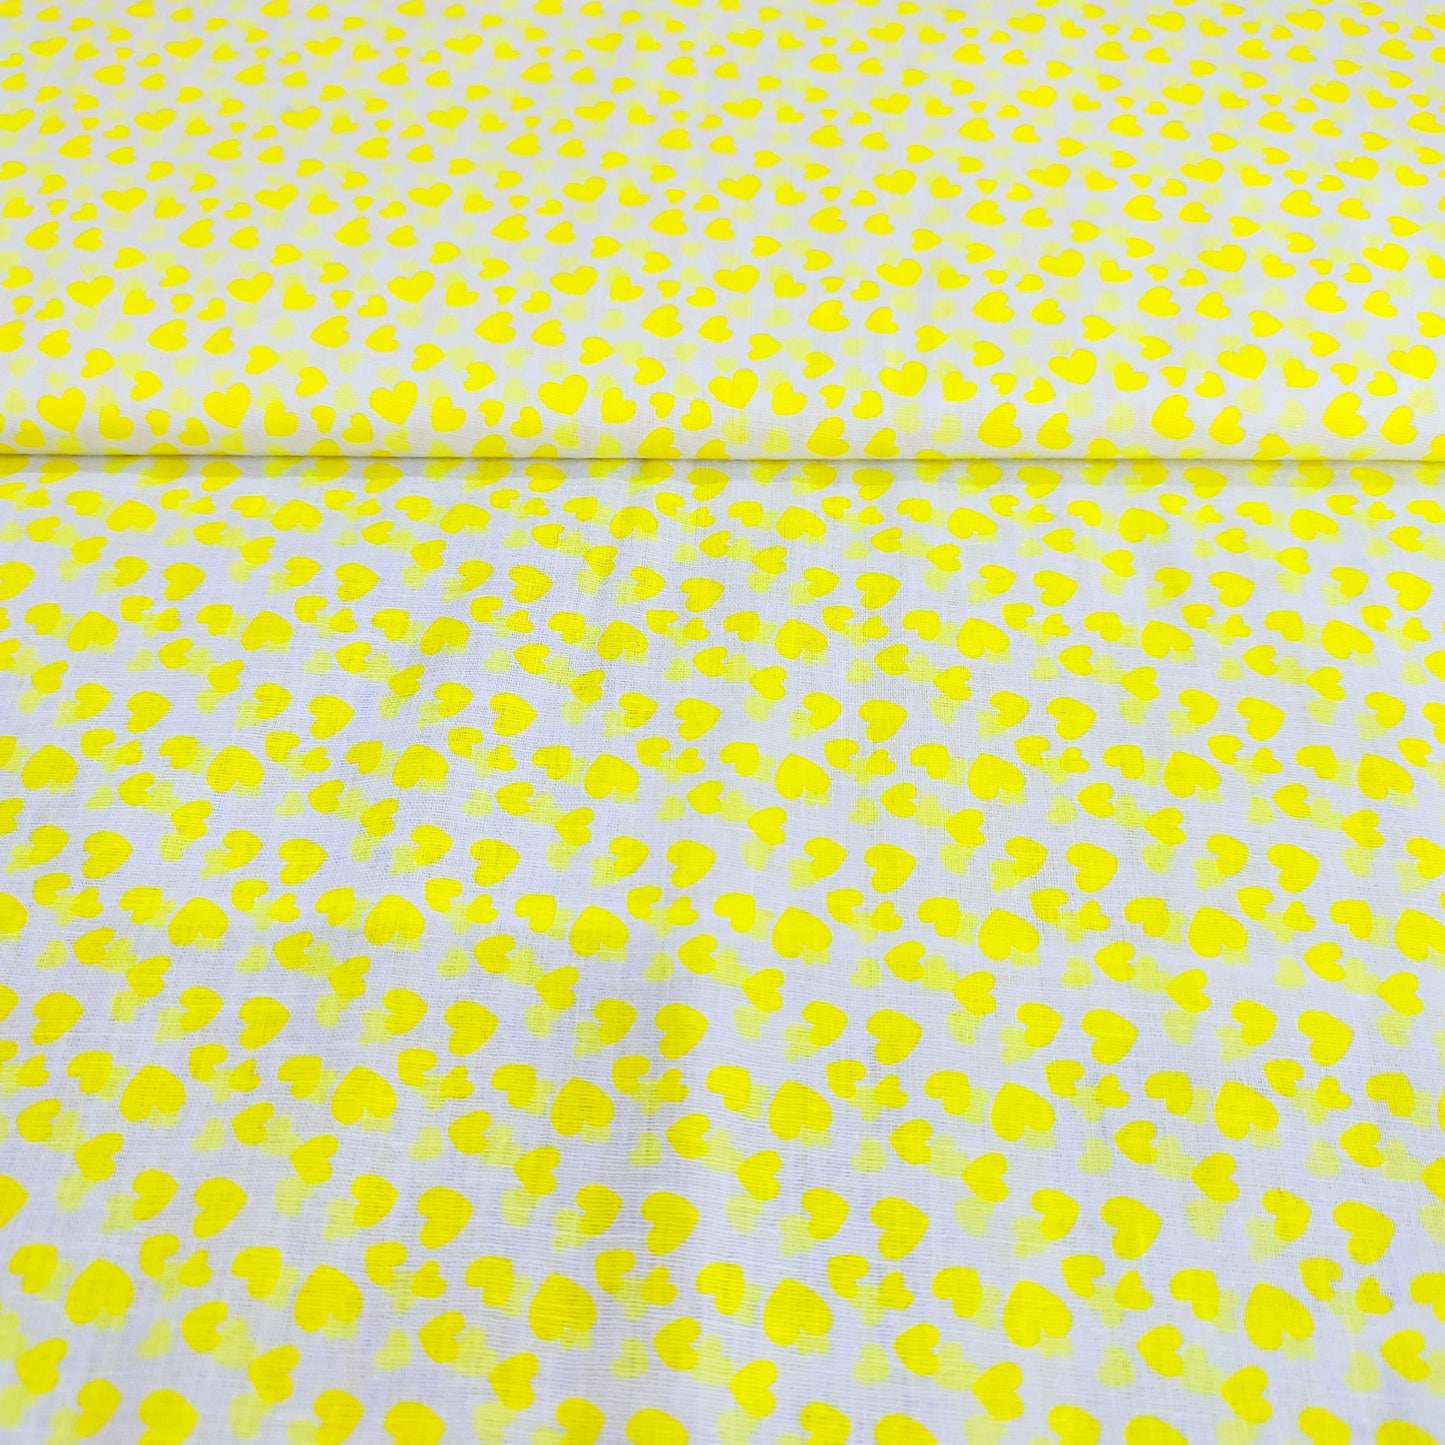 Little Neon Yellow Hearts Cotton Fabric